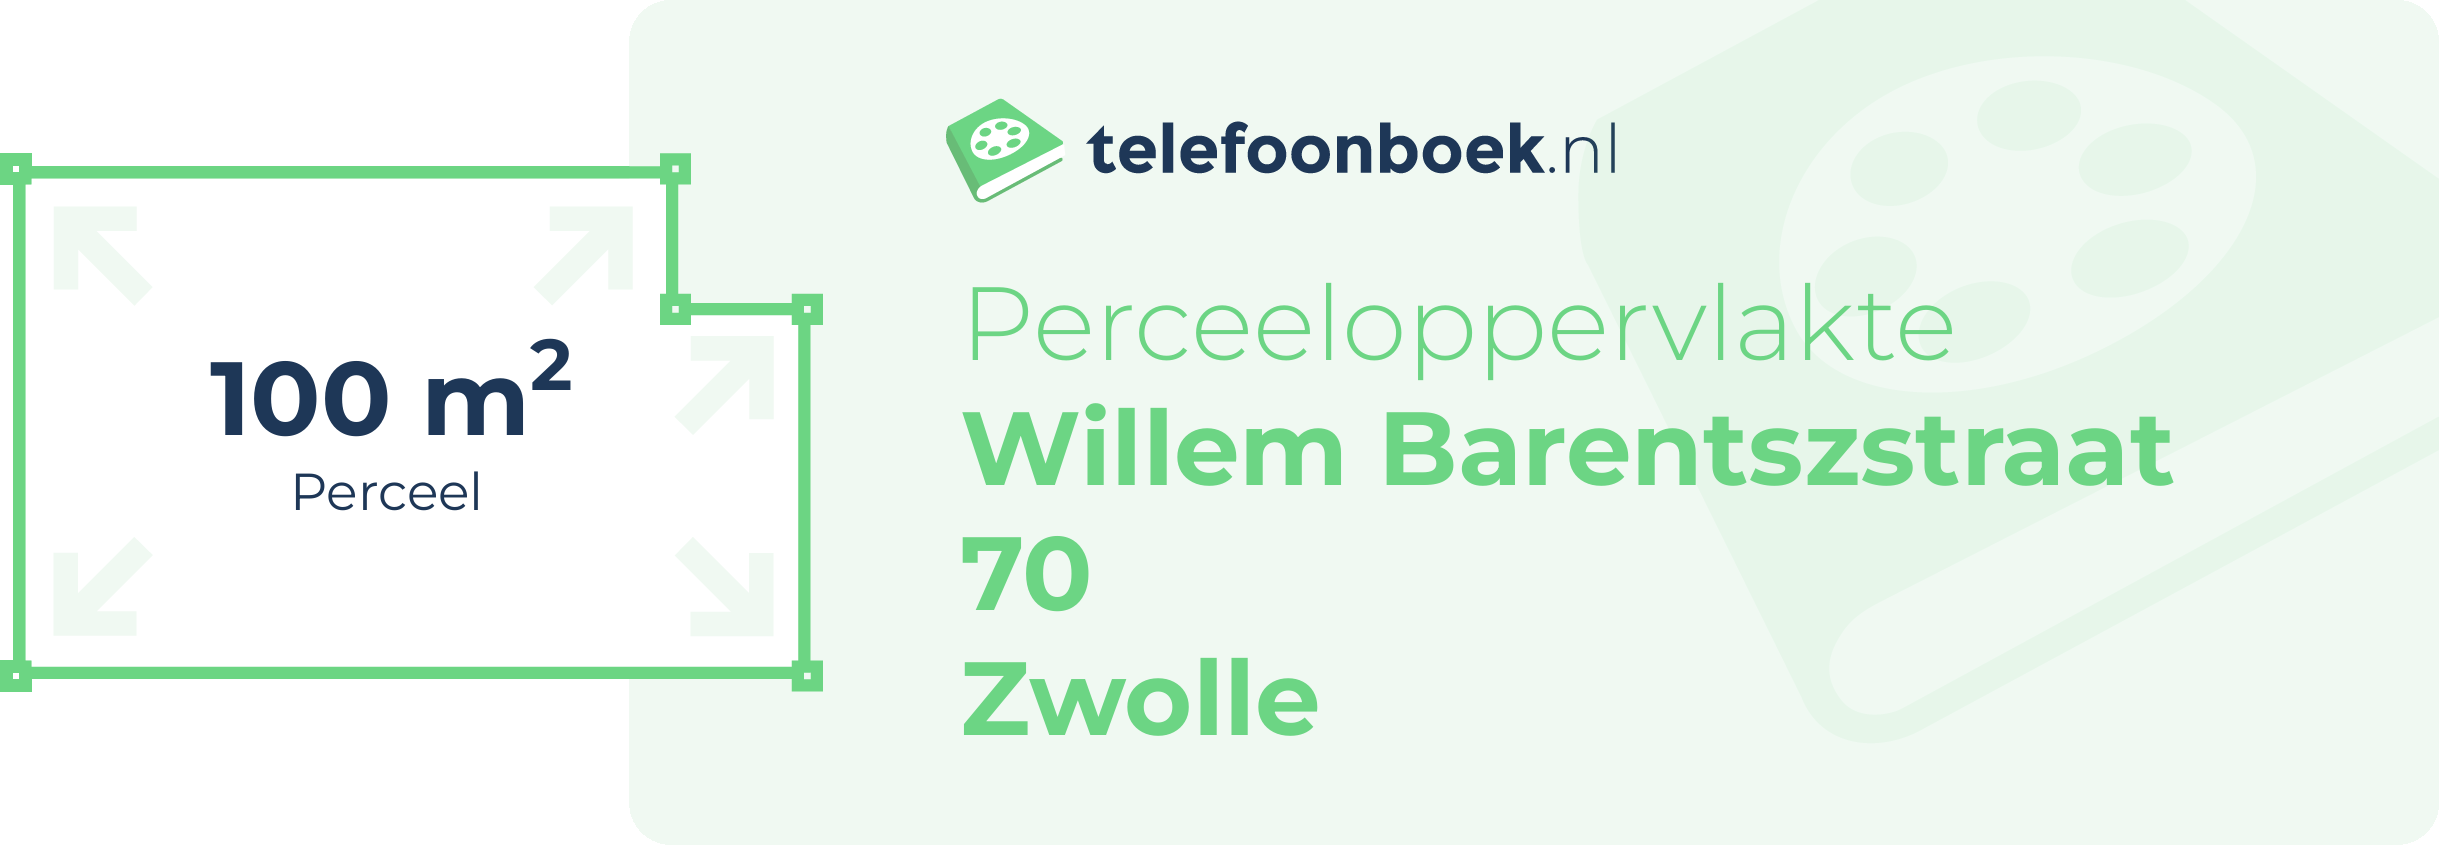 Perceeloppervlakte Willem Barentszstraat 70 Zwolle